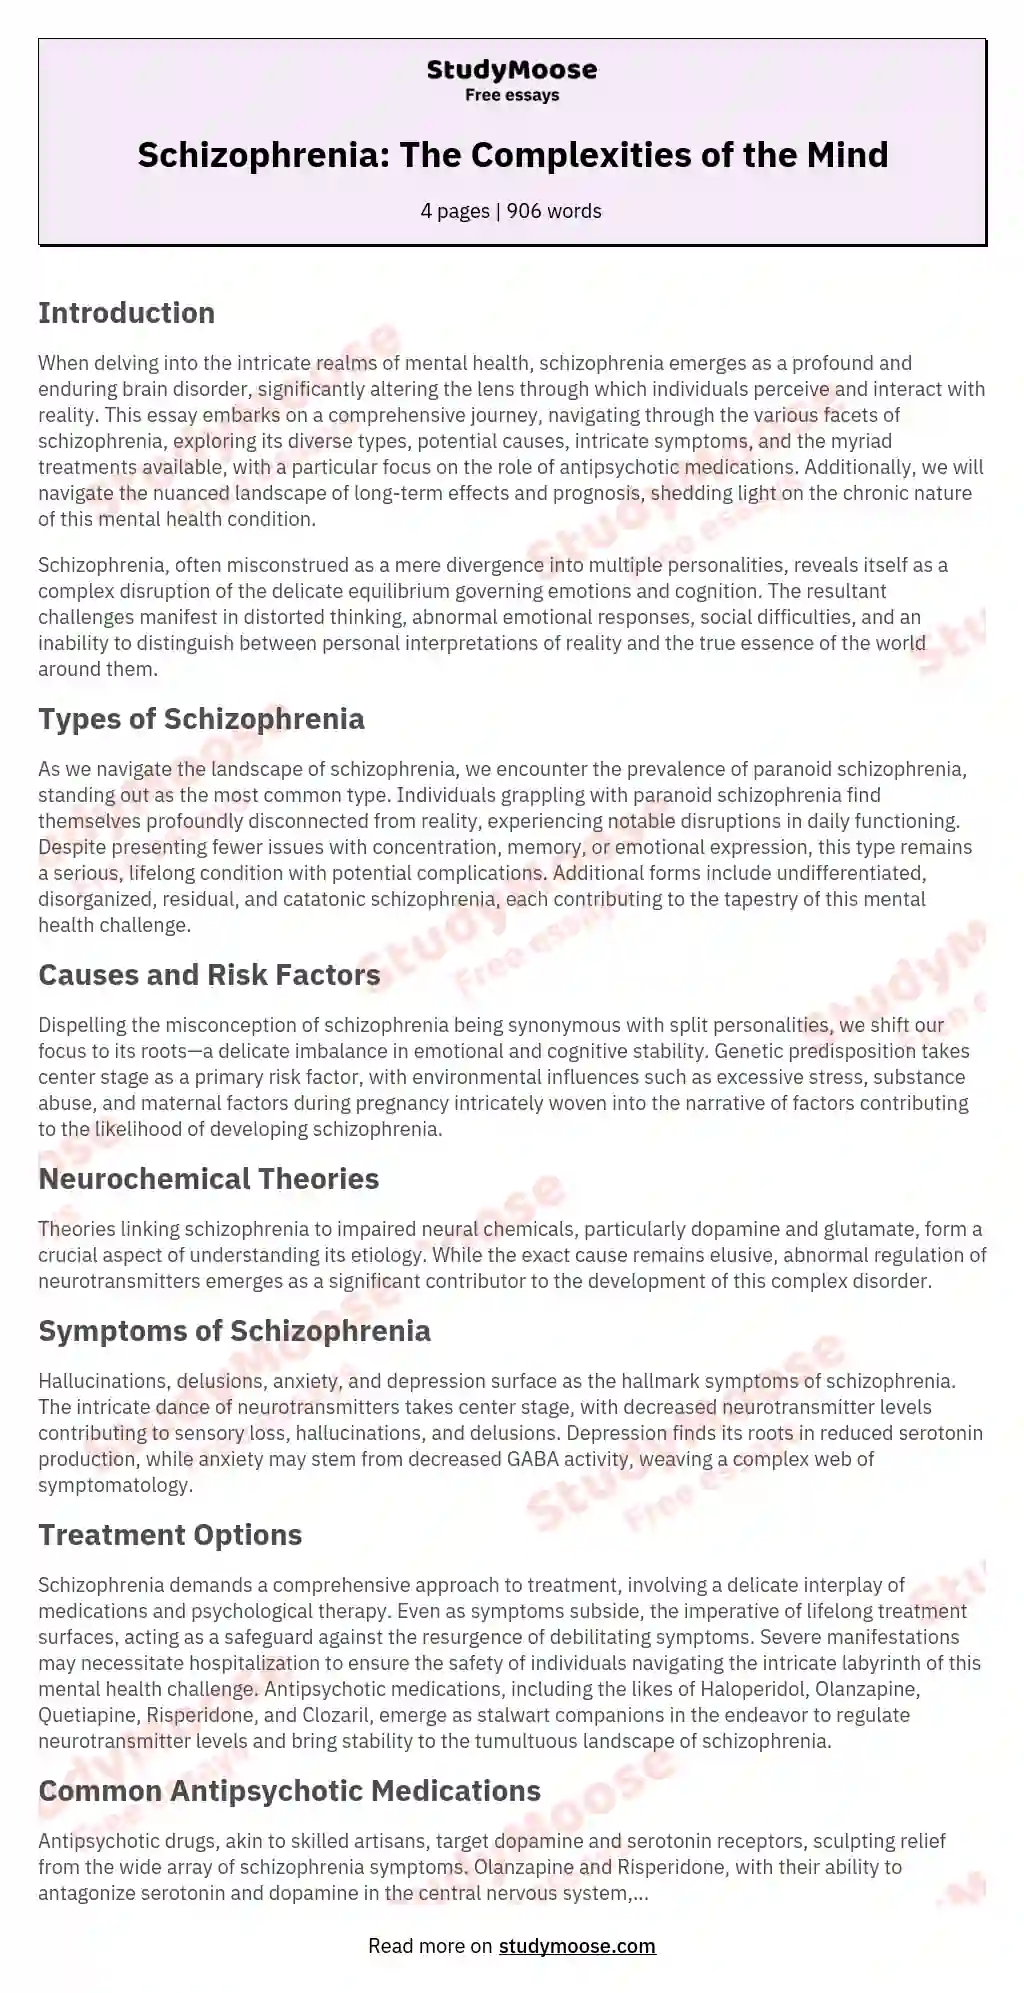 thesis statement for schizophrenia